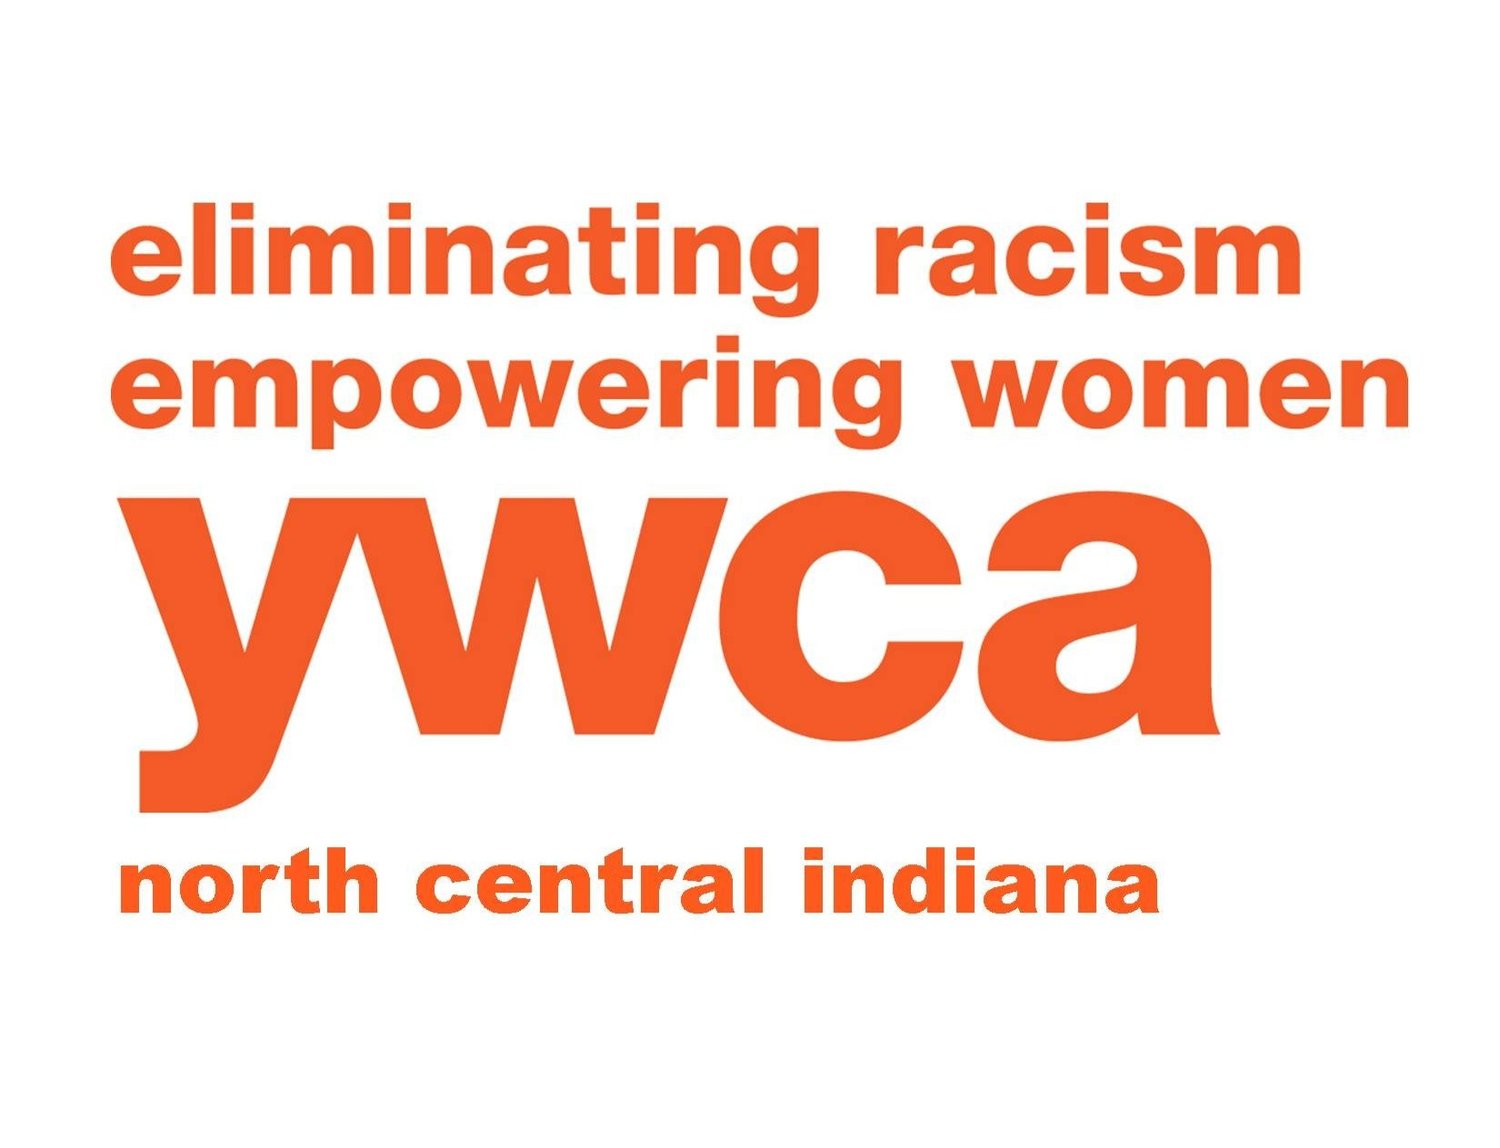 YWCA North Central Indiana